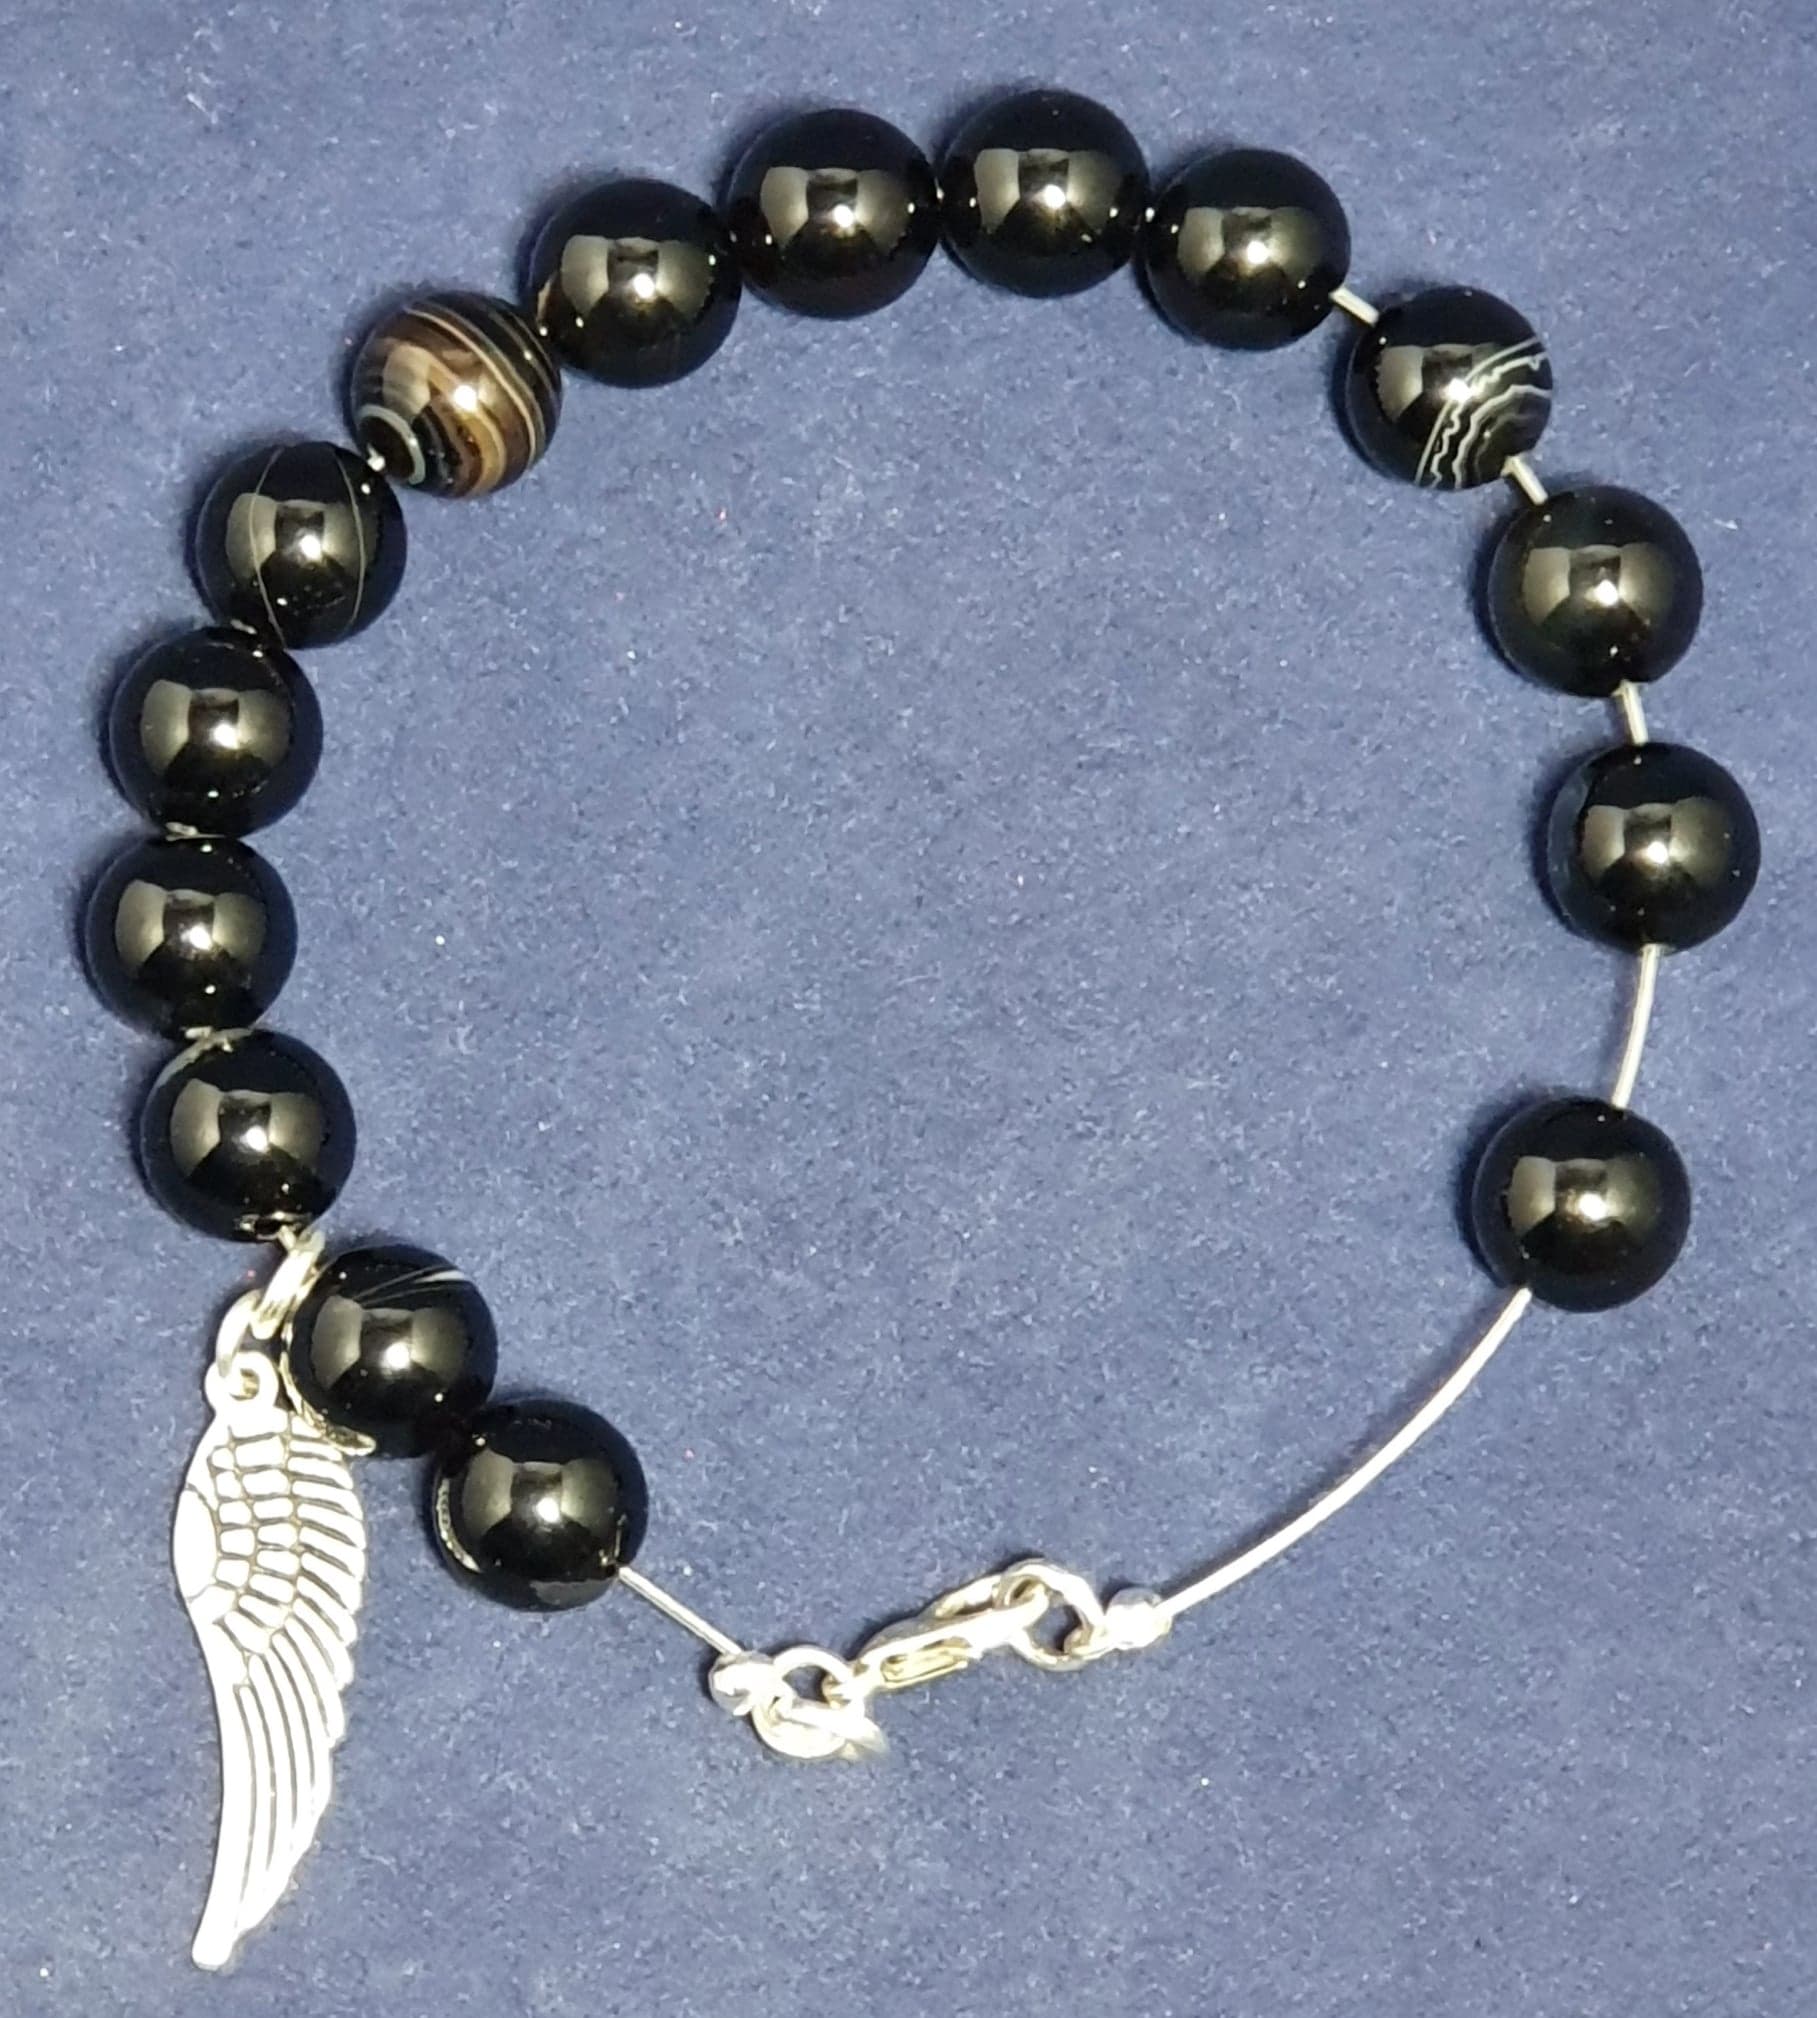 Agate worry beads / meditation bracelet